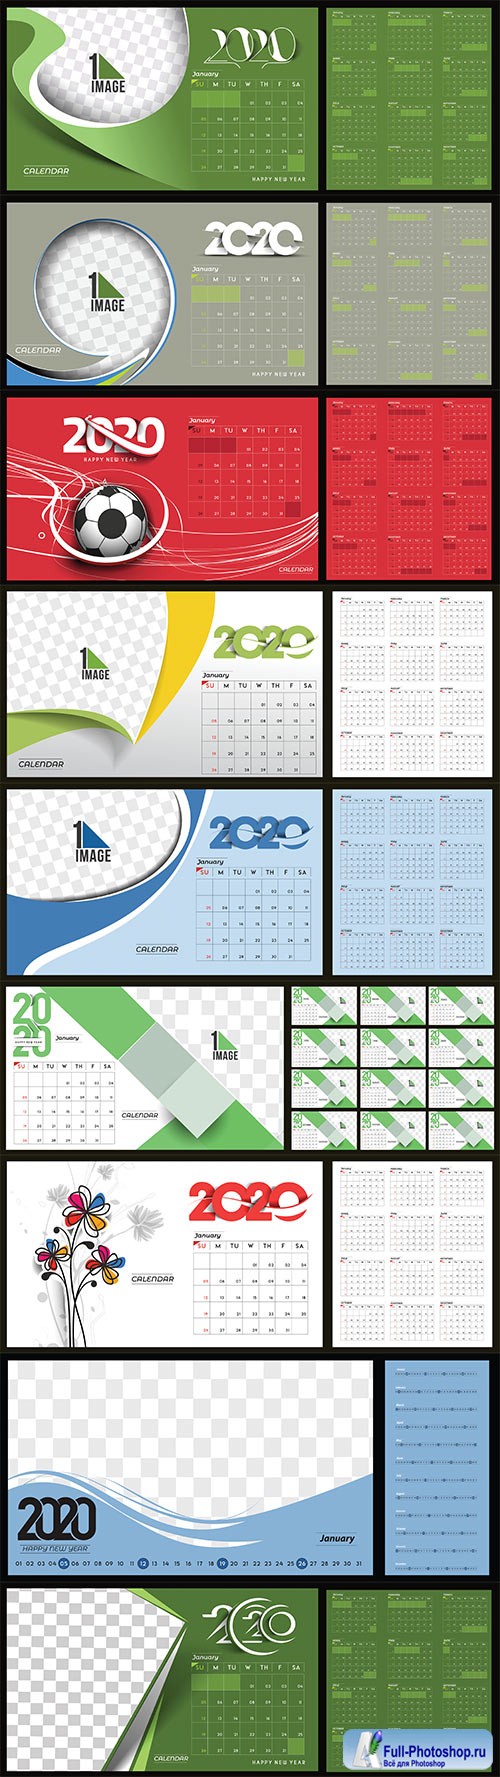 Happy new year 2020 Calendar vector illustration 